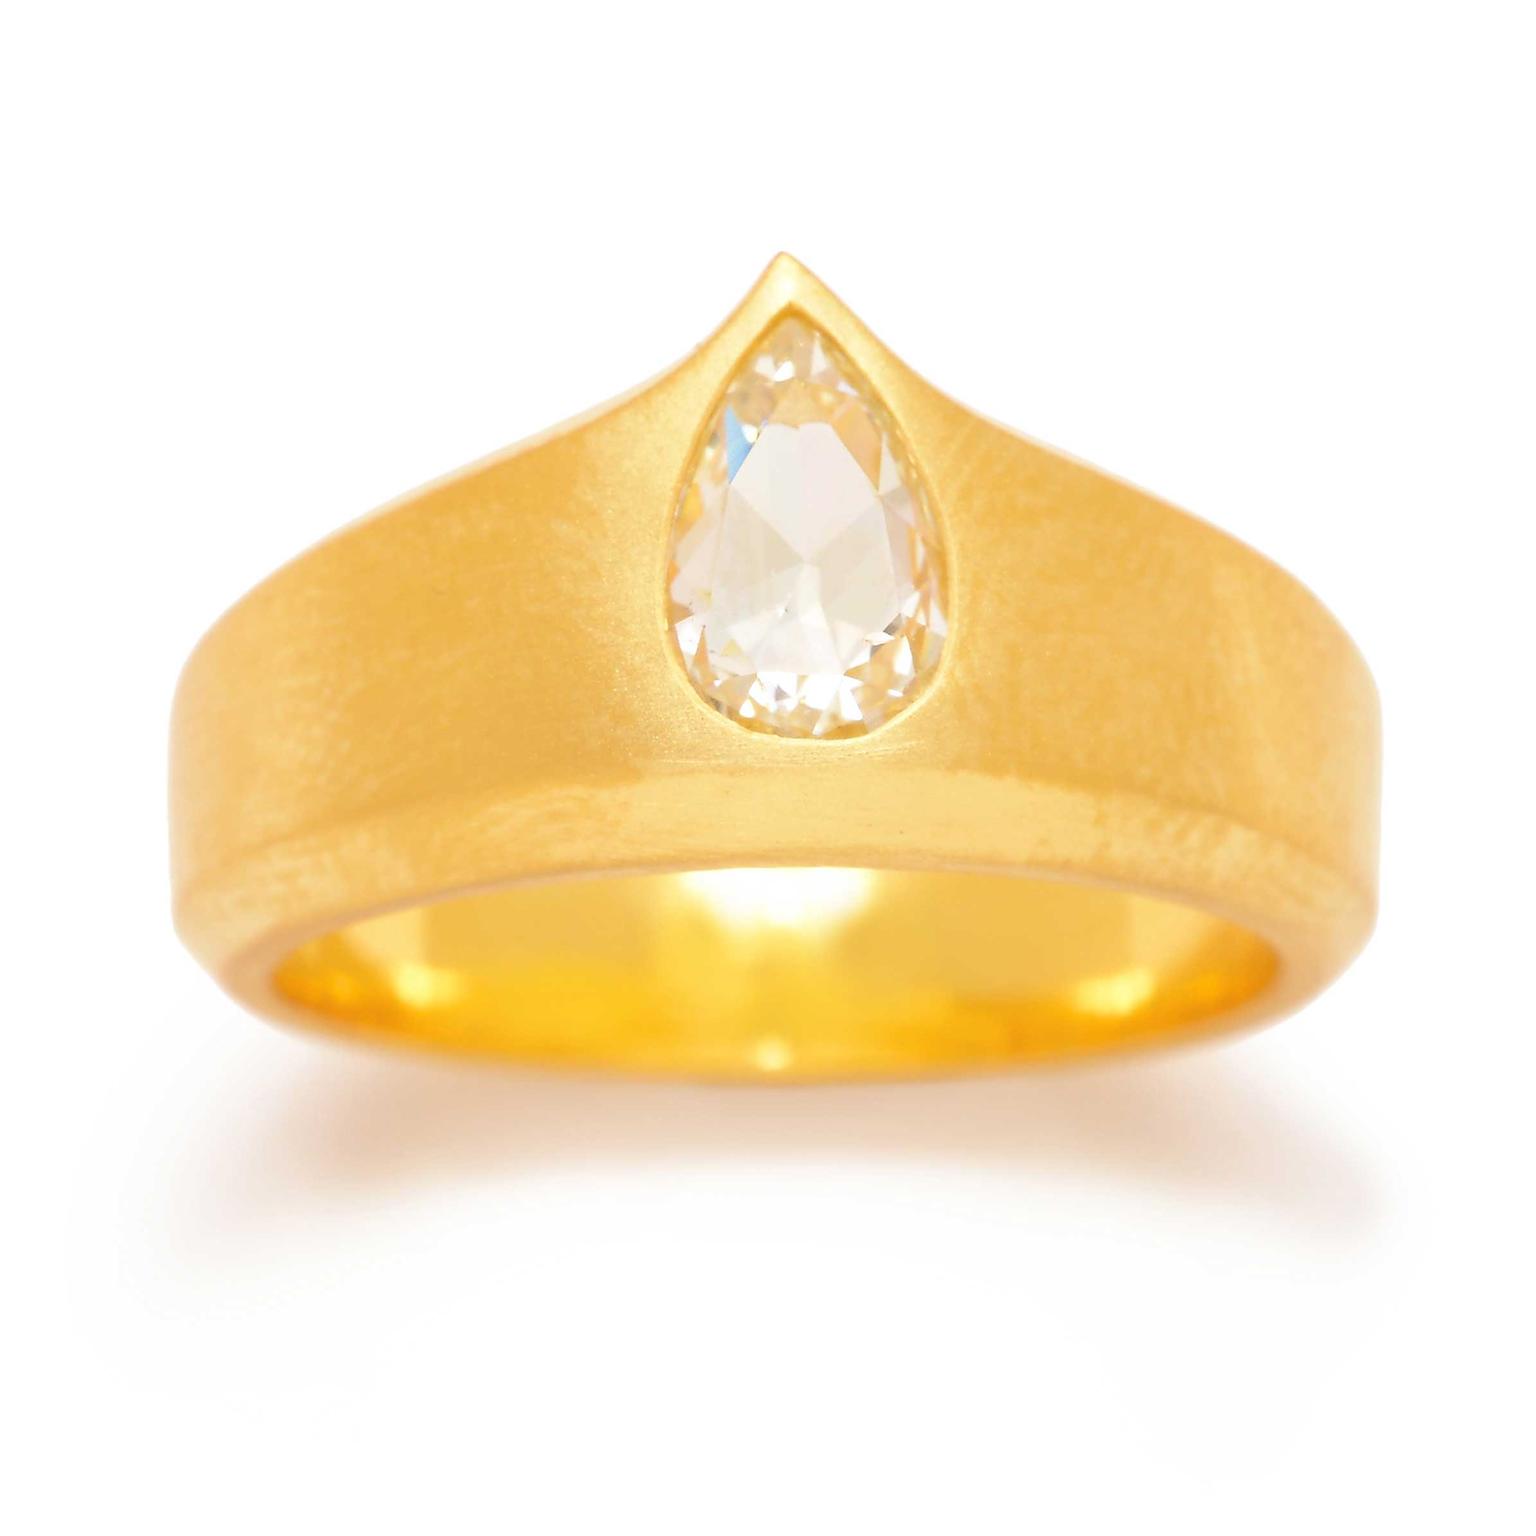 Gold Ring design online catalog